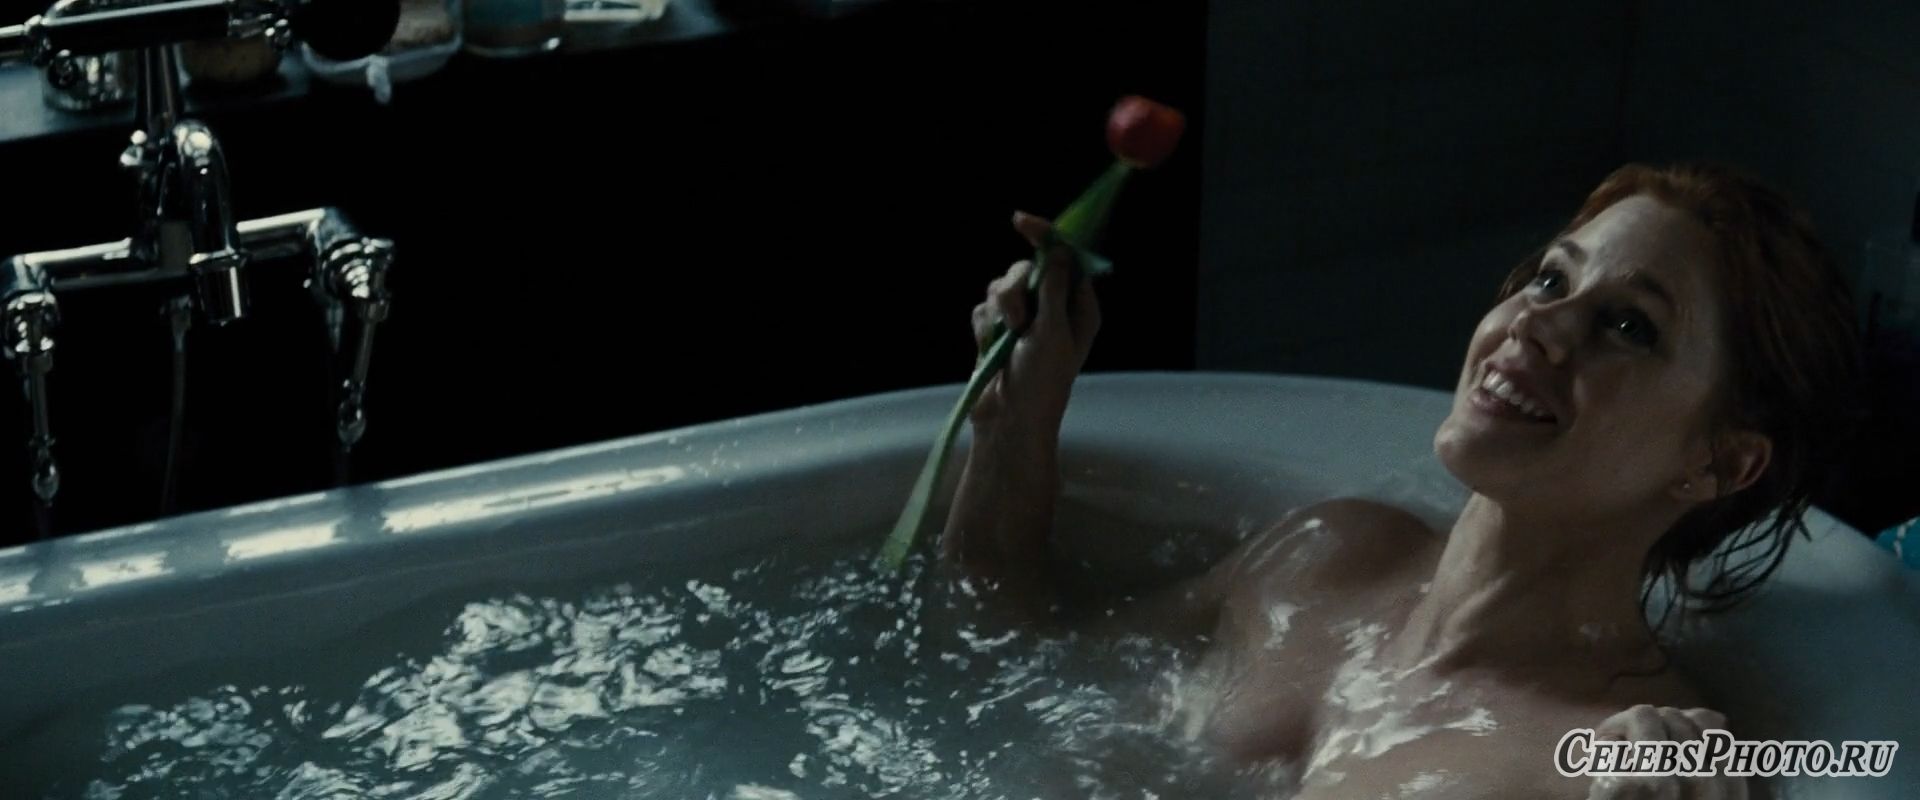 Hot bathtub scenes